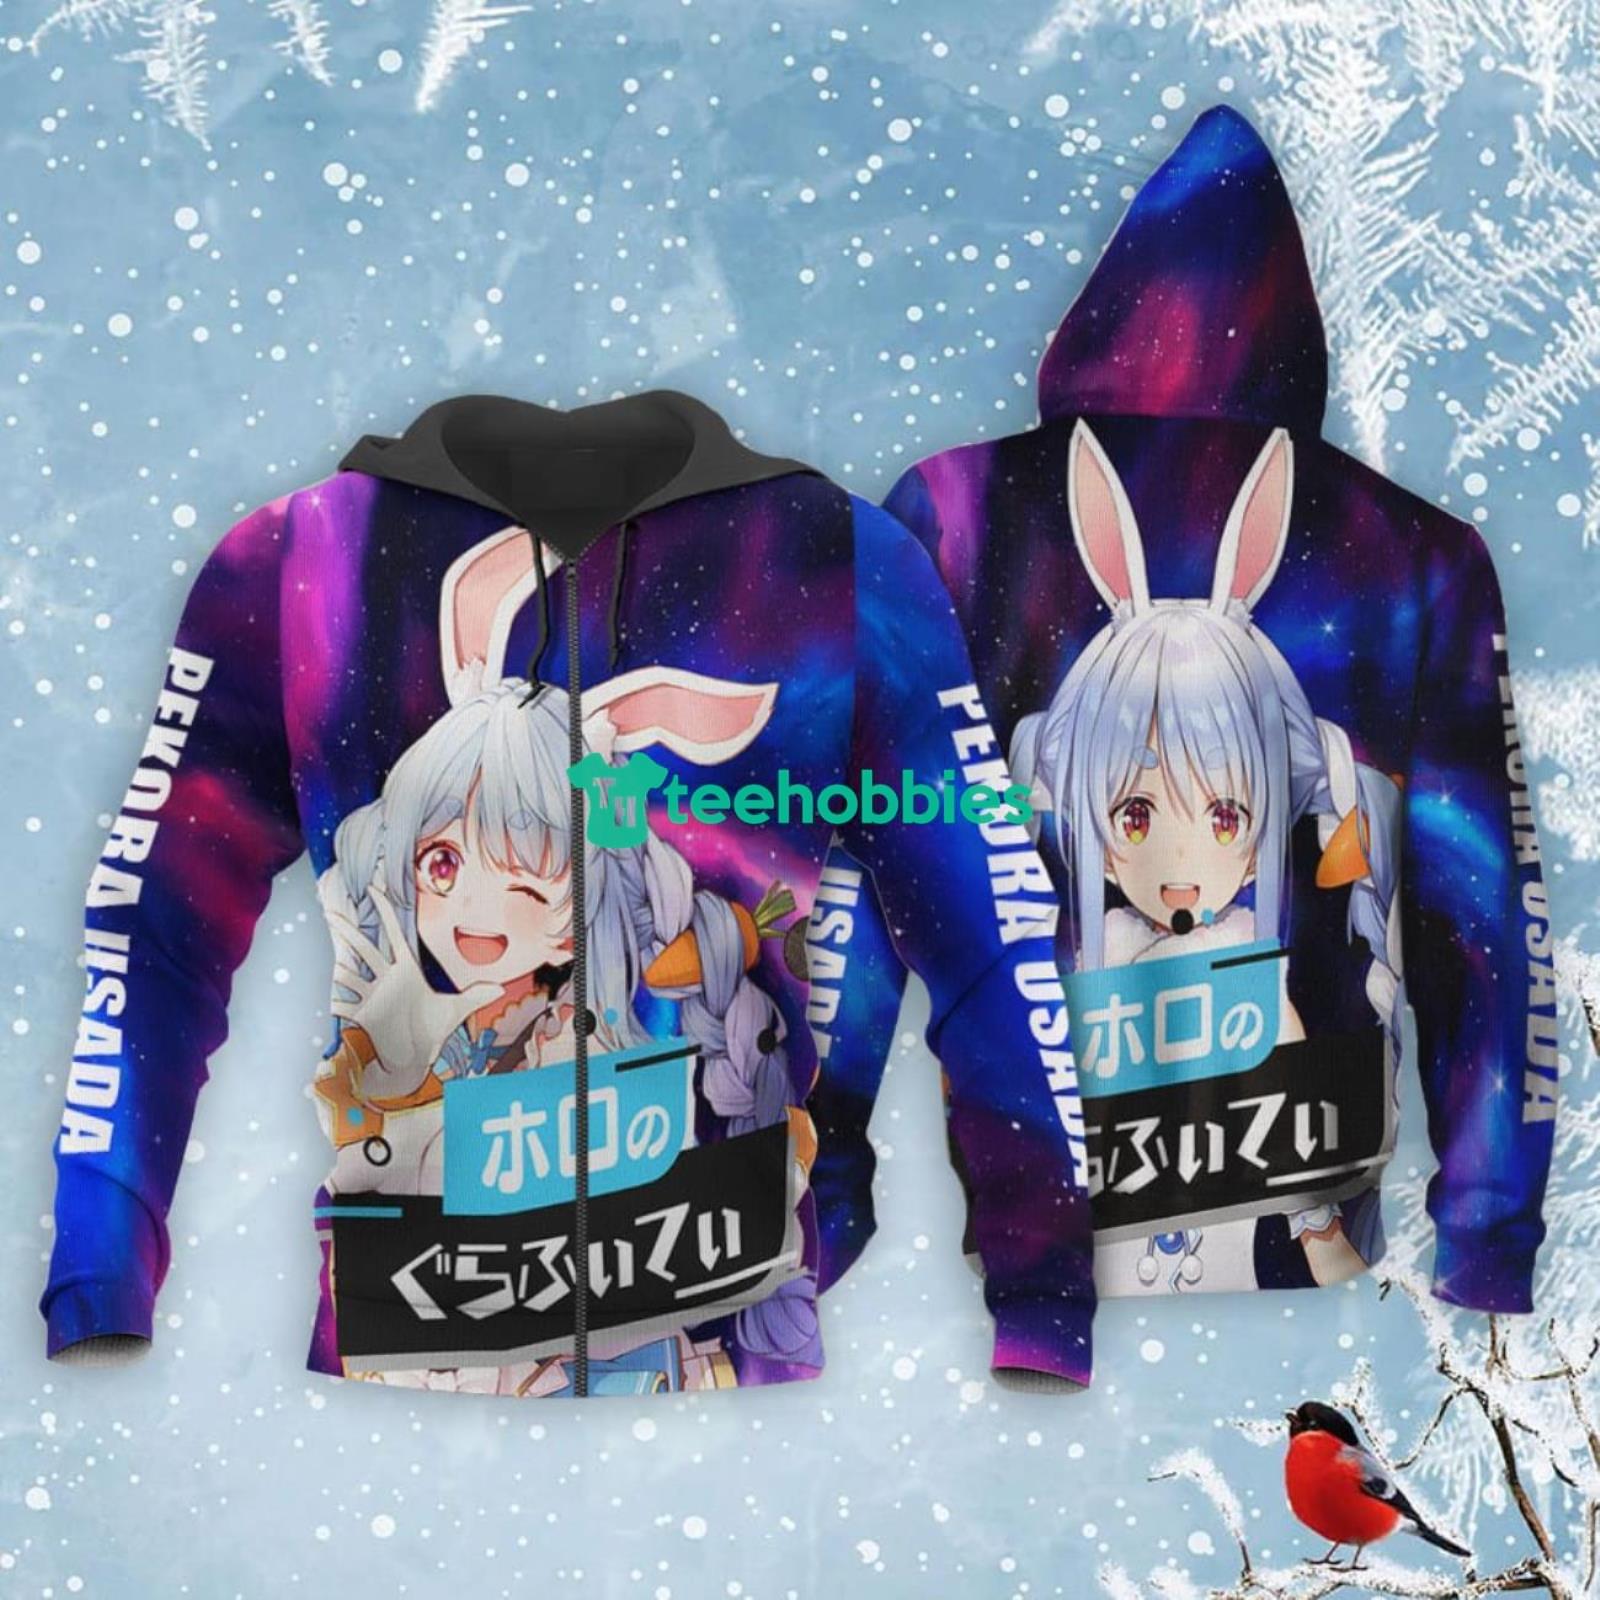 Pekora Usada All Over Printed 3D Shirt Holo Graffiti Custom Anime Fans Product Photo 1 Product photo 1